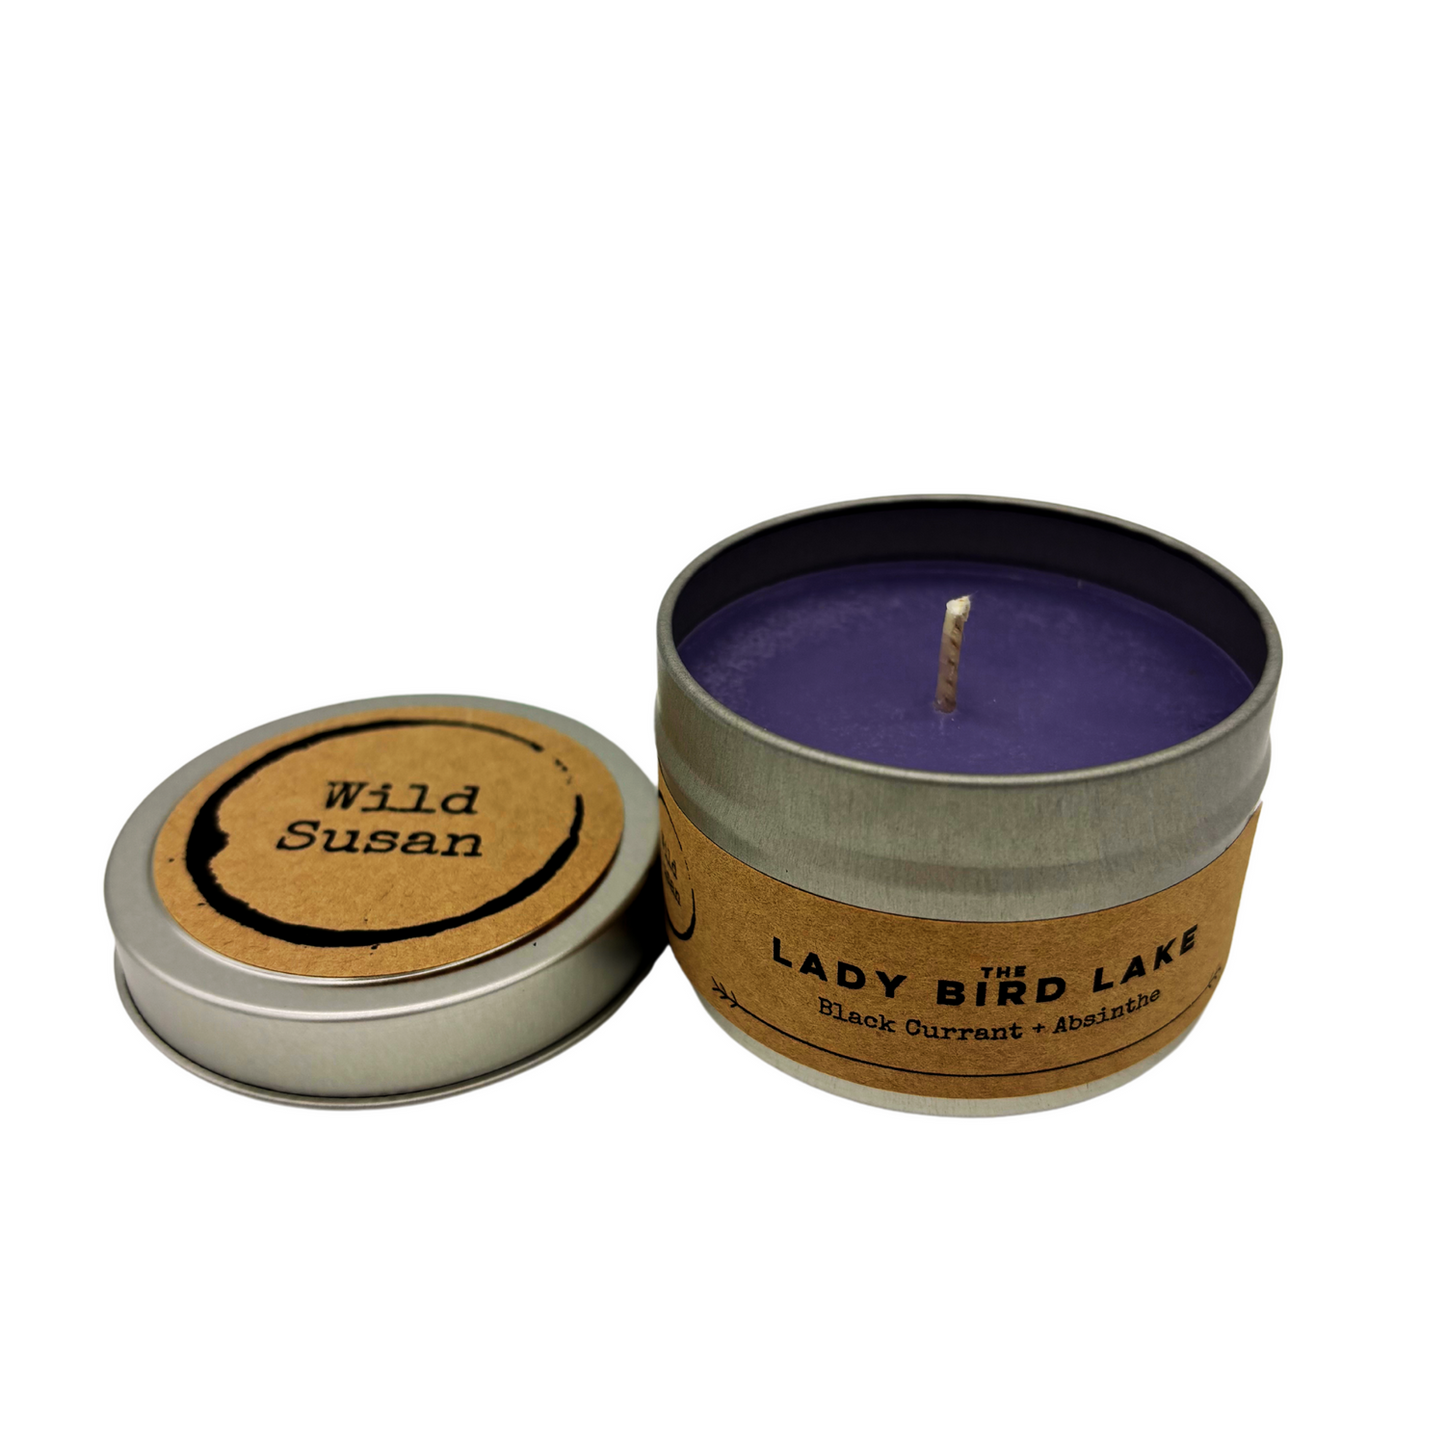 Lady Bird Lake [Black Currant + Absinthe] Soy Candle/Wax Melt